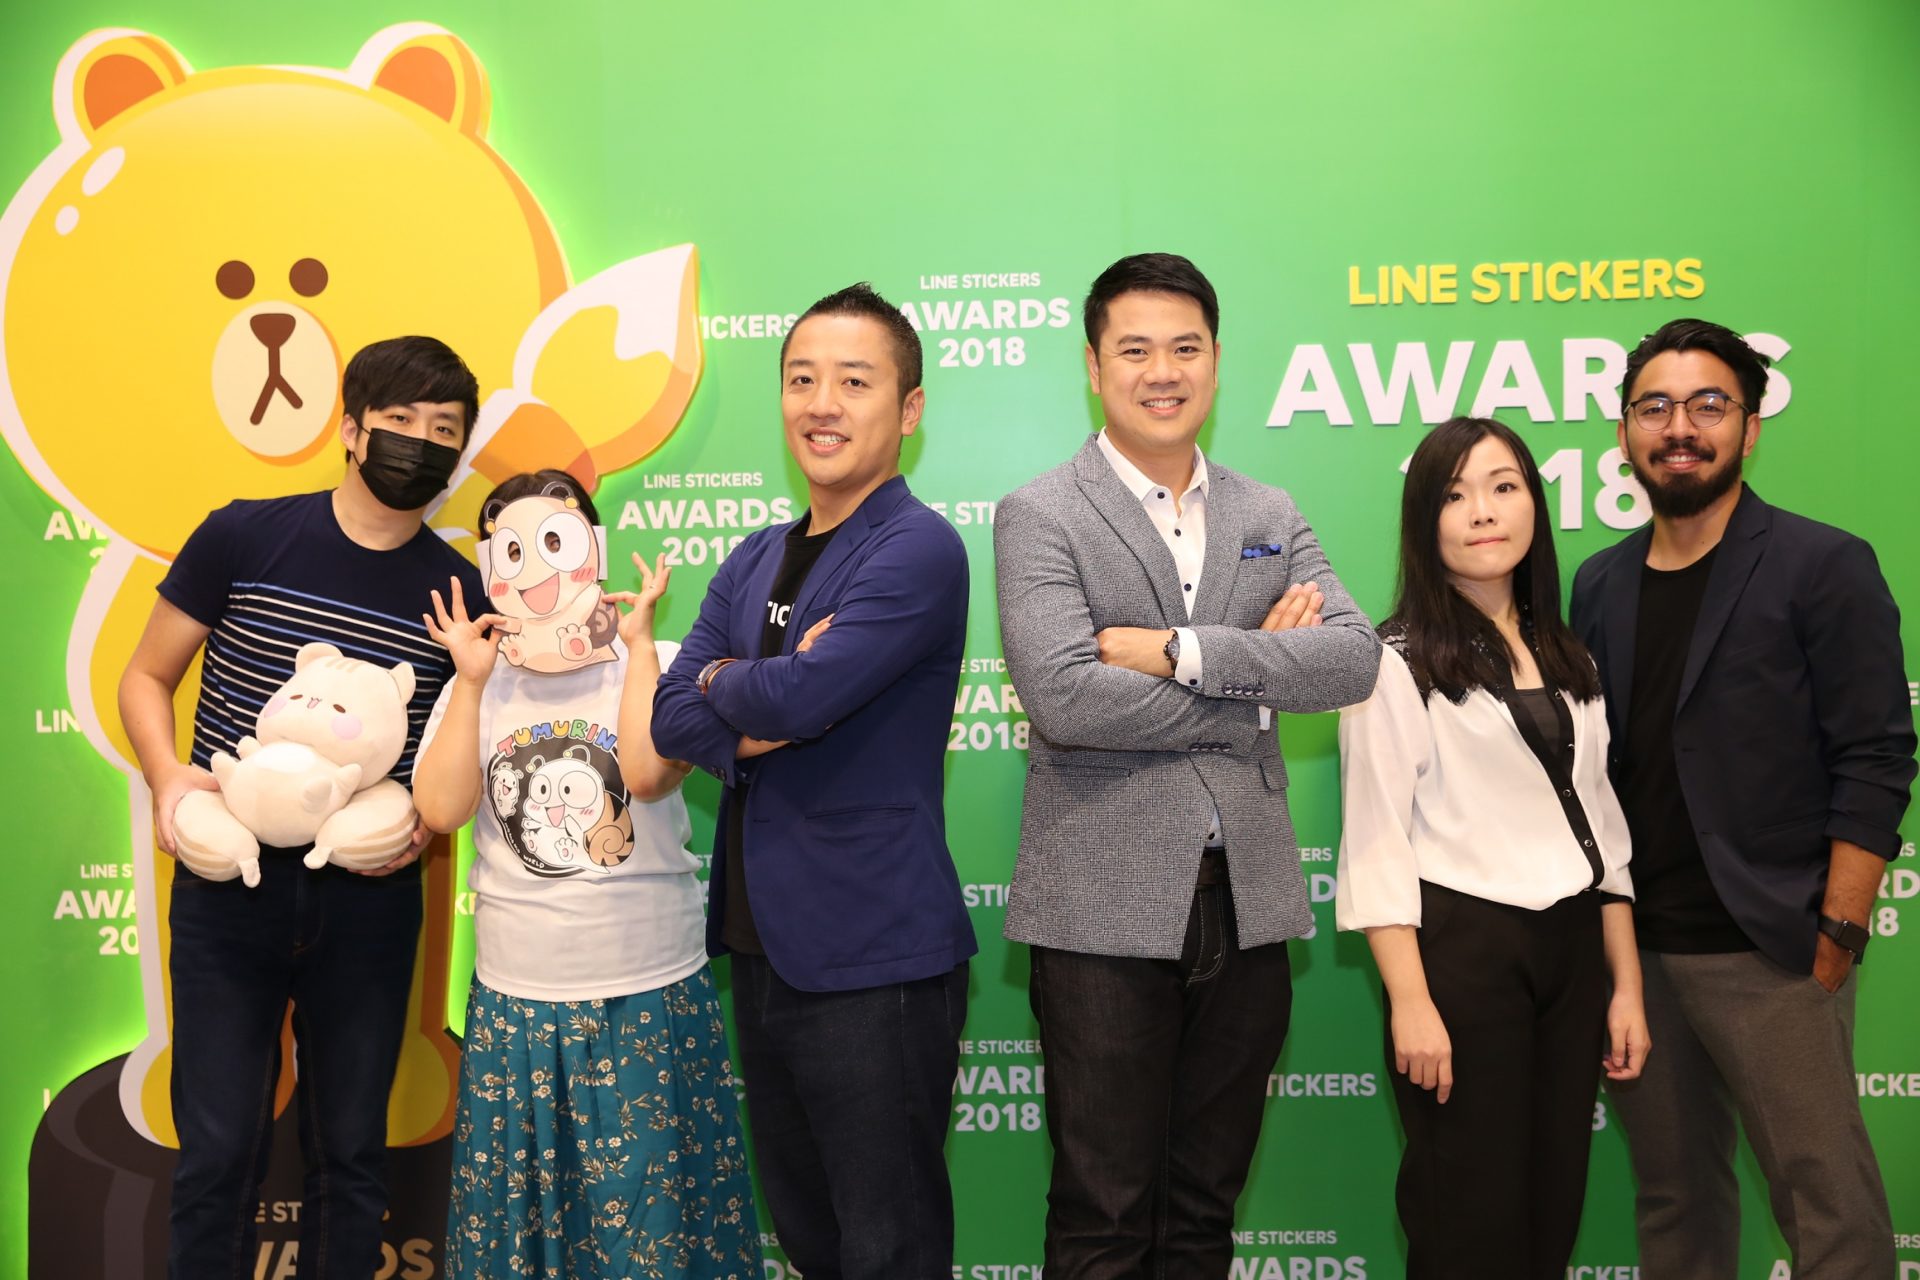 LINE ประเทศไทยเฮ!! สติ๊กเกอร์ไทยเติบโตอันดับ1 ยอดดาวน์โหลดเพิ่มสูงถึง52%